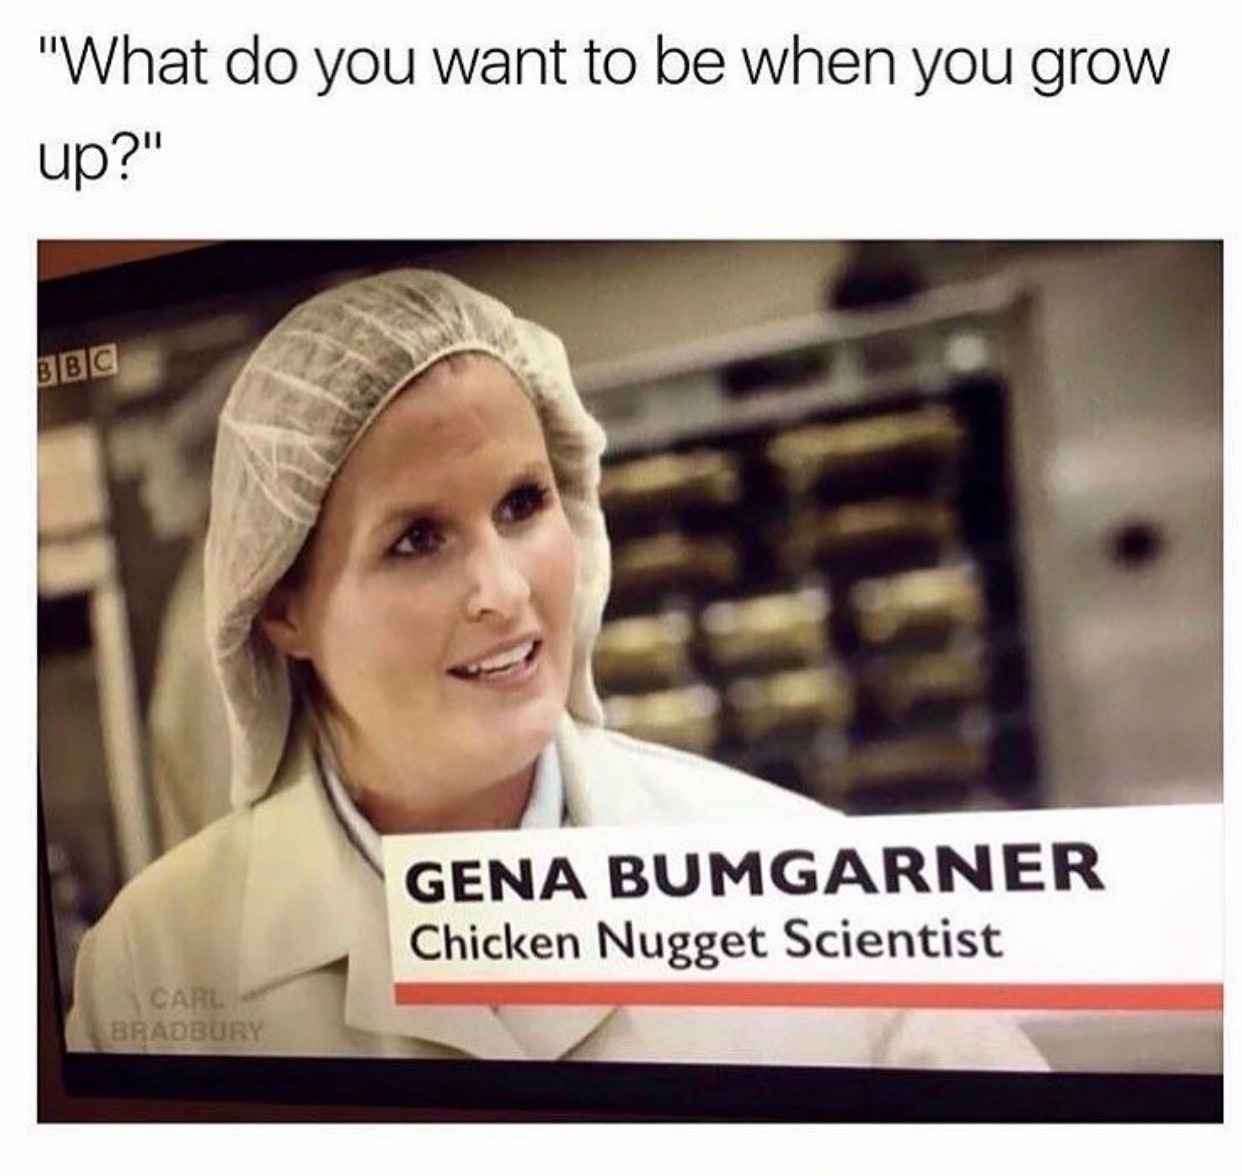 chicken nugget scientist - "What do you want to be when you grow up?" Bbc Gena Bumgarner Chicken Nugget Scientist Carl Bradbury